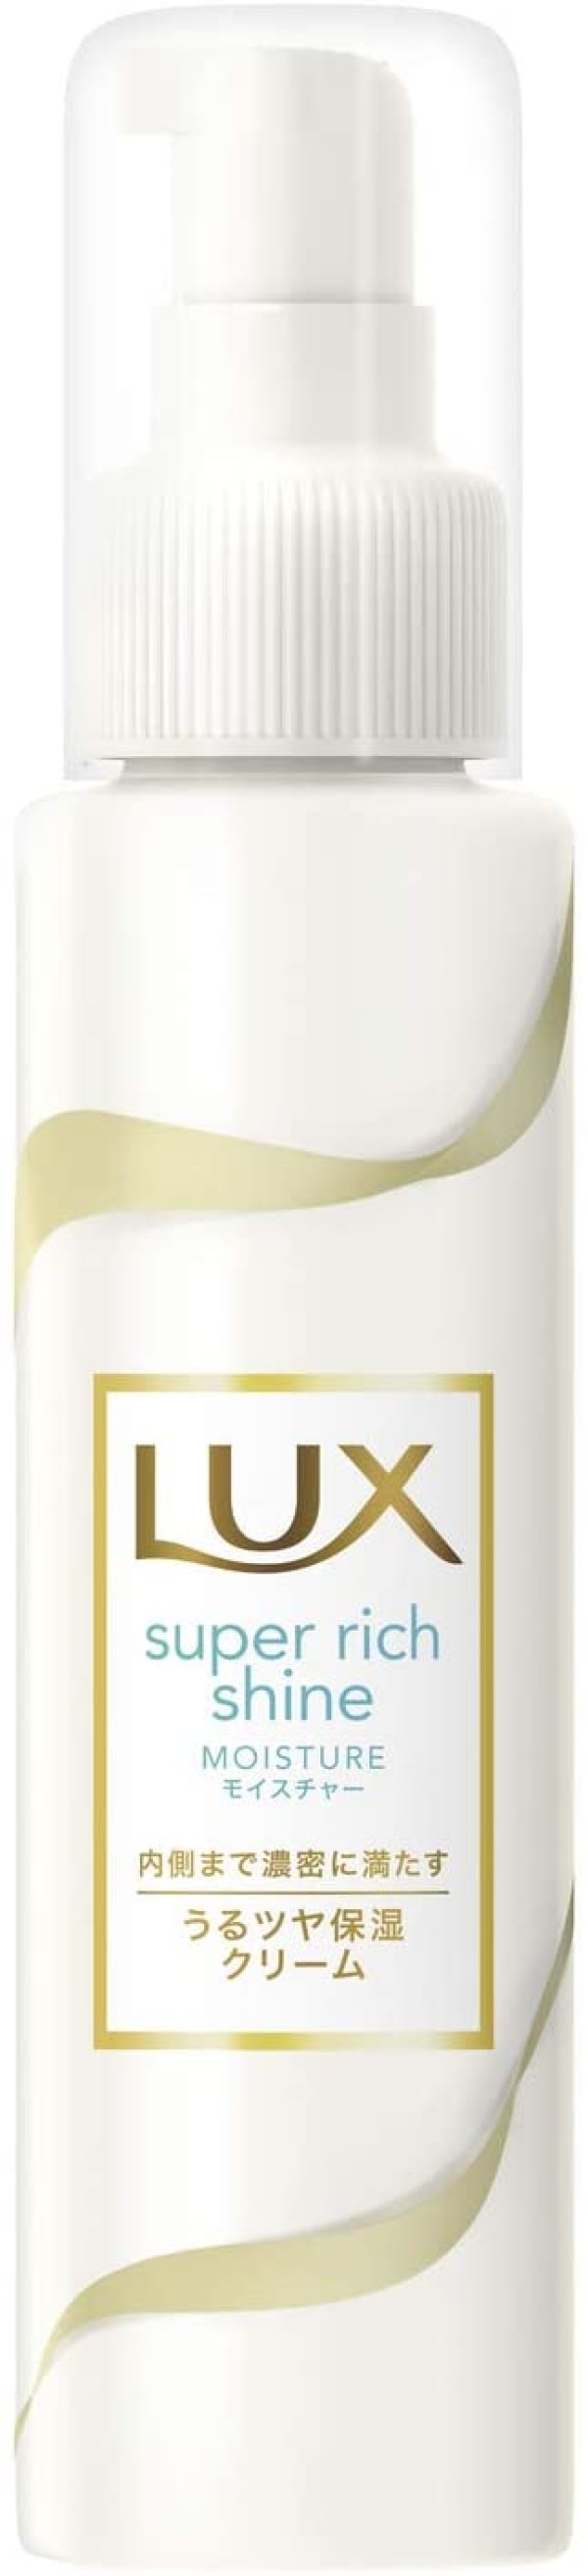 Увлажняющий крем LUX Super Rich Shine Moisture Rich Moisturizing Cream